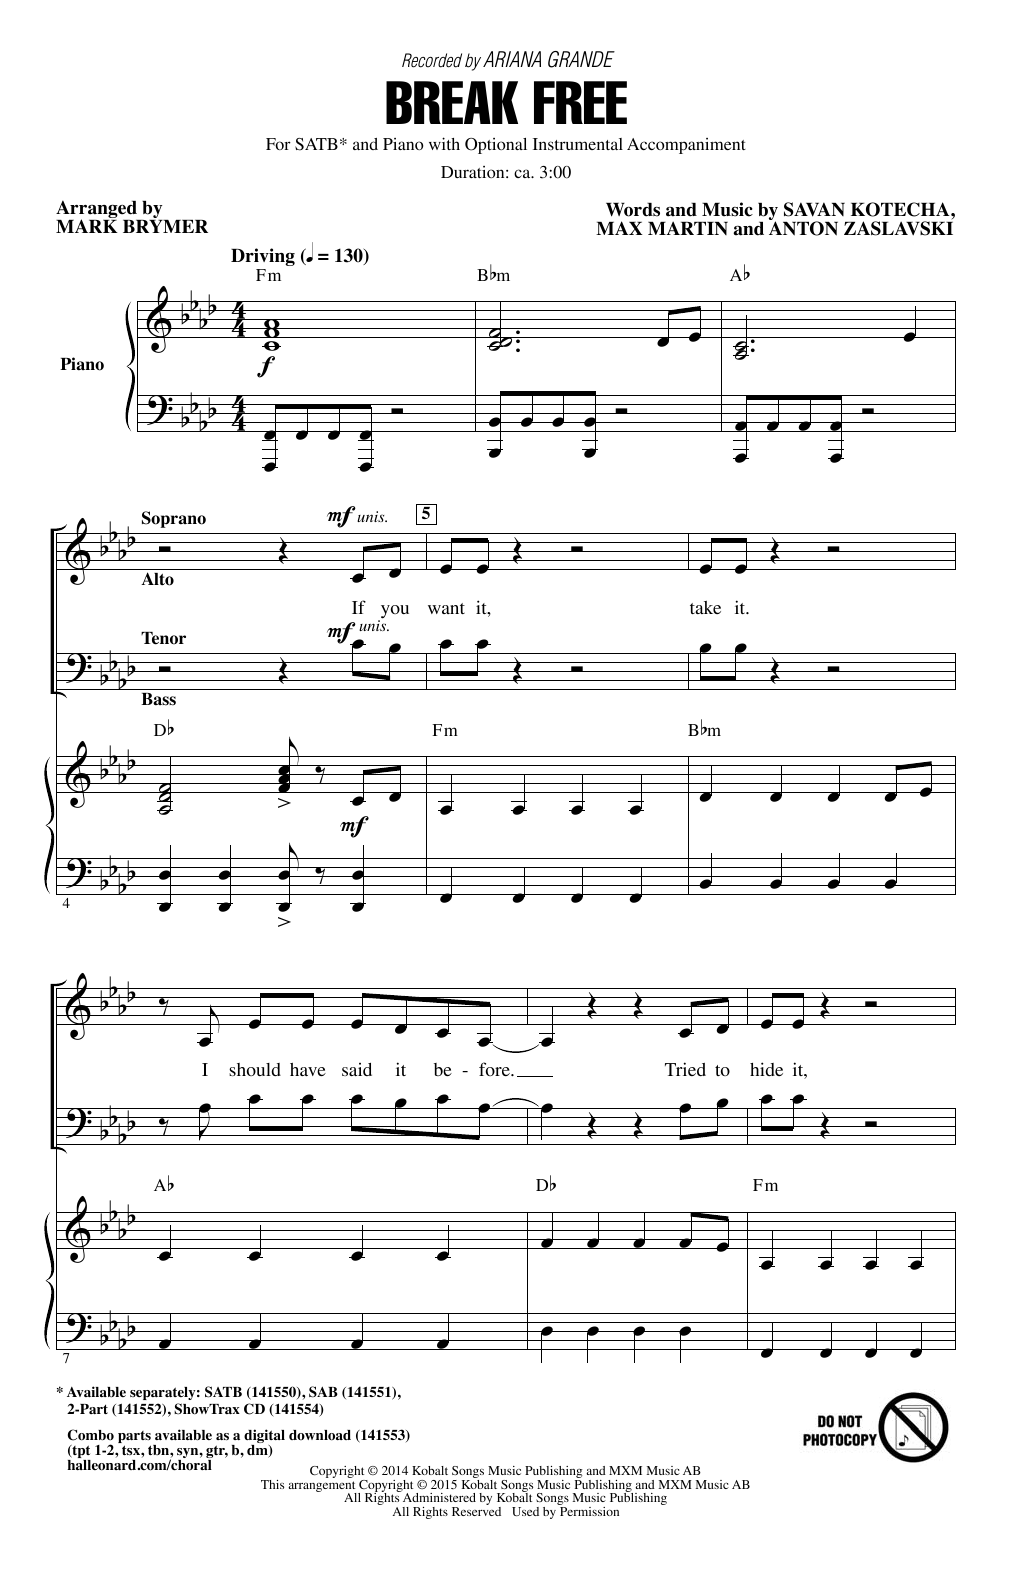 Ariana Grande Break Free (feat. Zedd) (arr. Mark Brymer) Sheet Music Notes & Chords for 2-Part Choir - Download or Print PDF